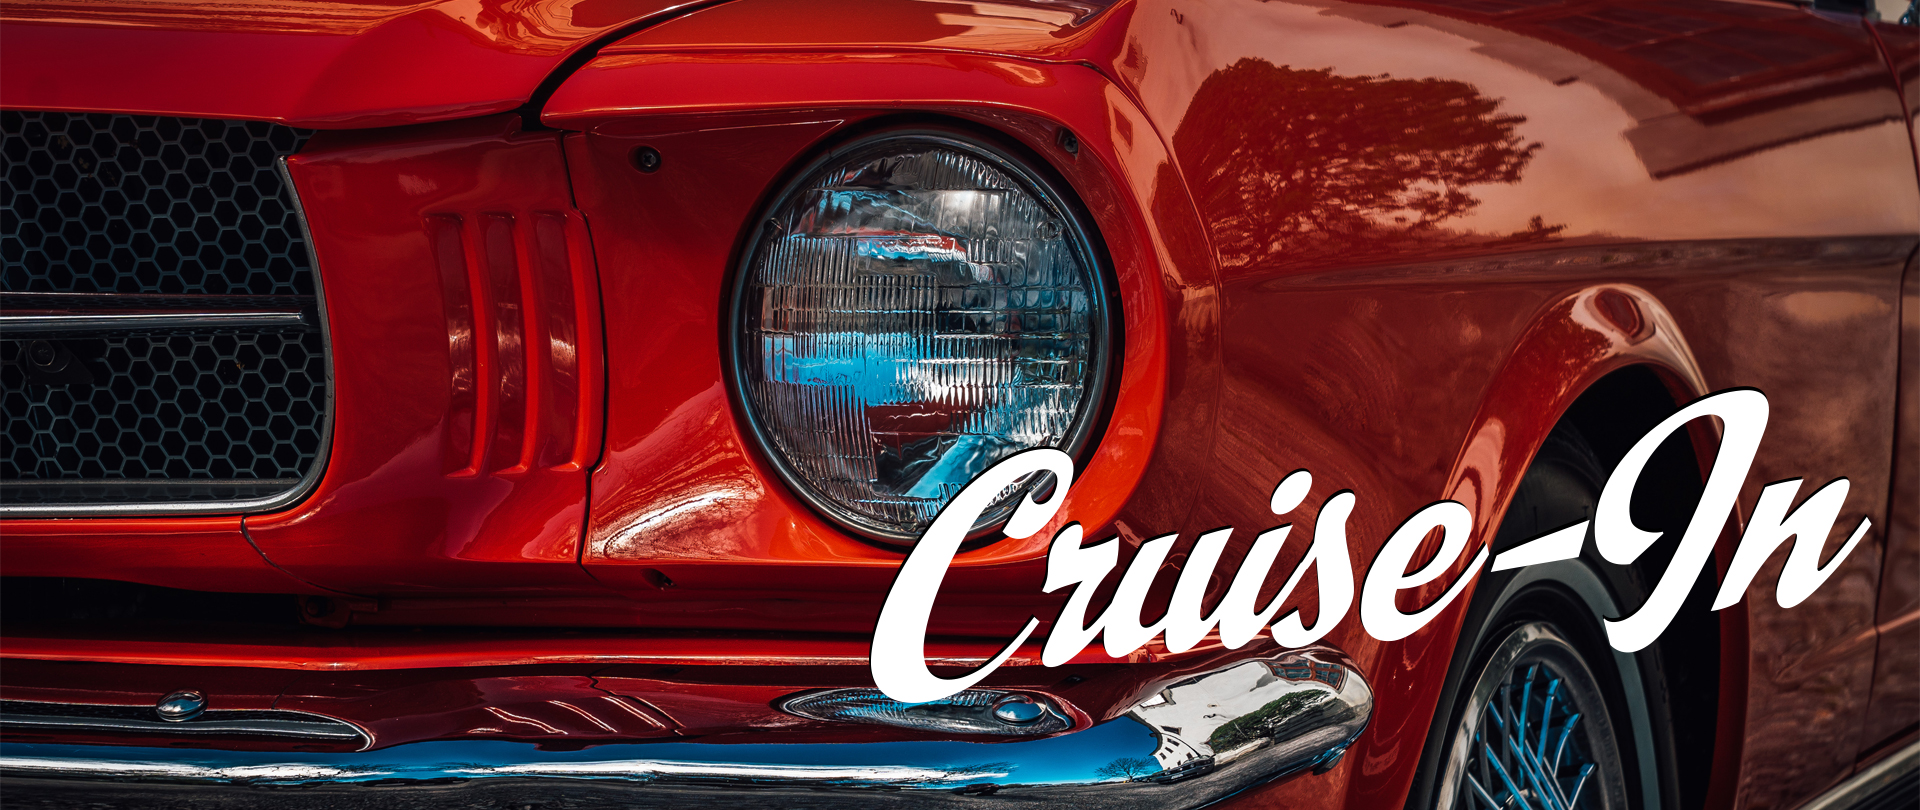 Calvary Cruise-In
FREE Community Car Show
Saturday, June 8
8:00 AM – 2:00 PM
Exhibitors — Register your car!
